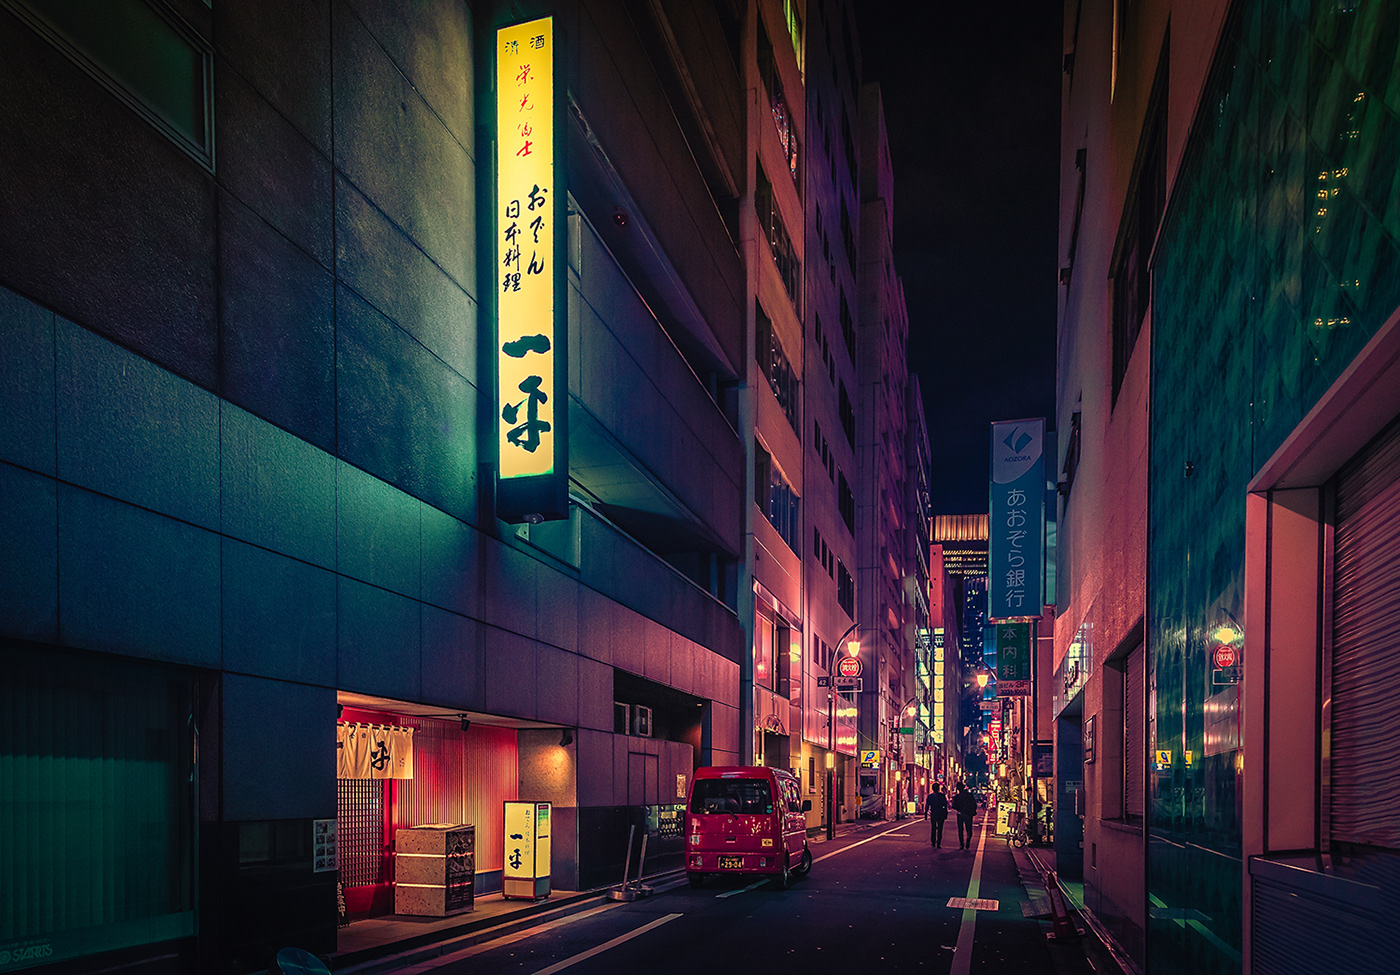 tokyo japan asia culture Travel surreal fantasy Cyberpunk city night